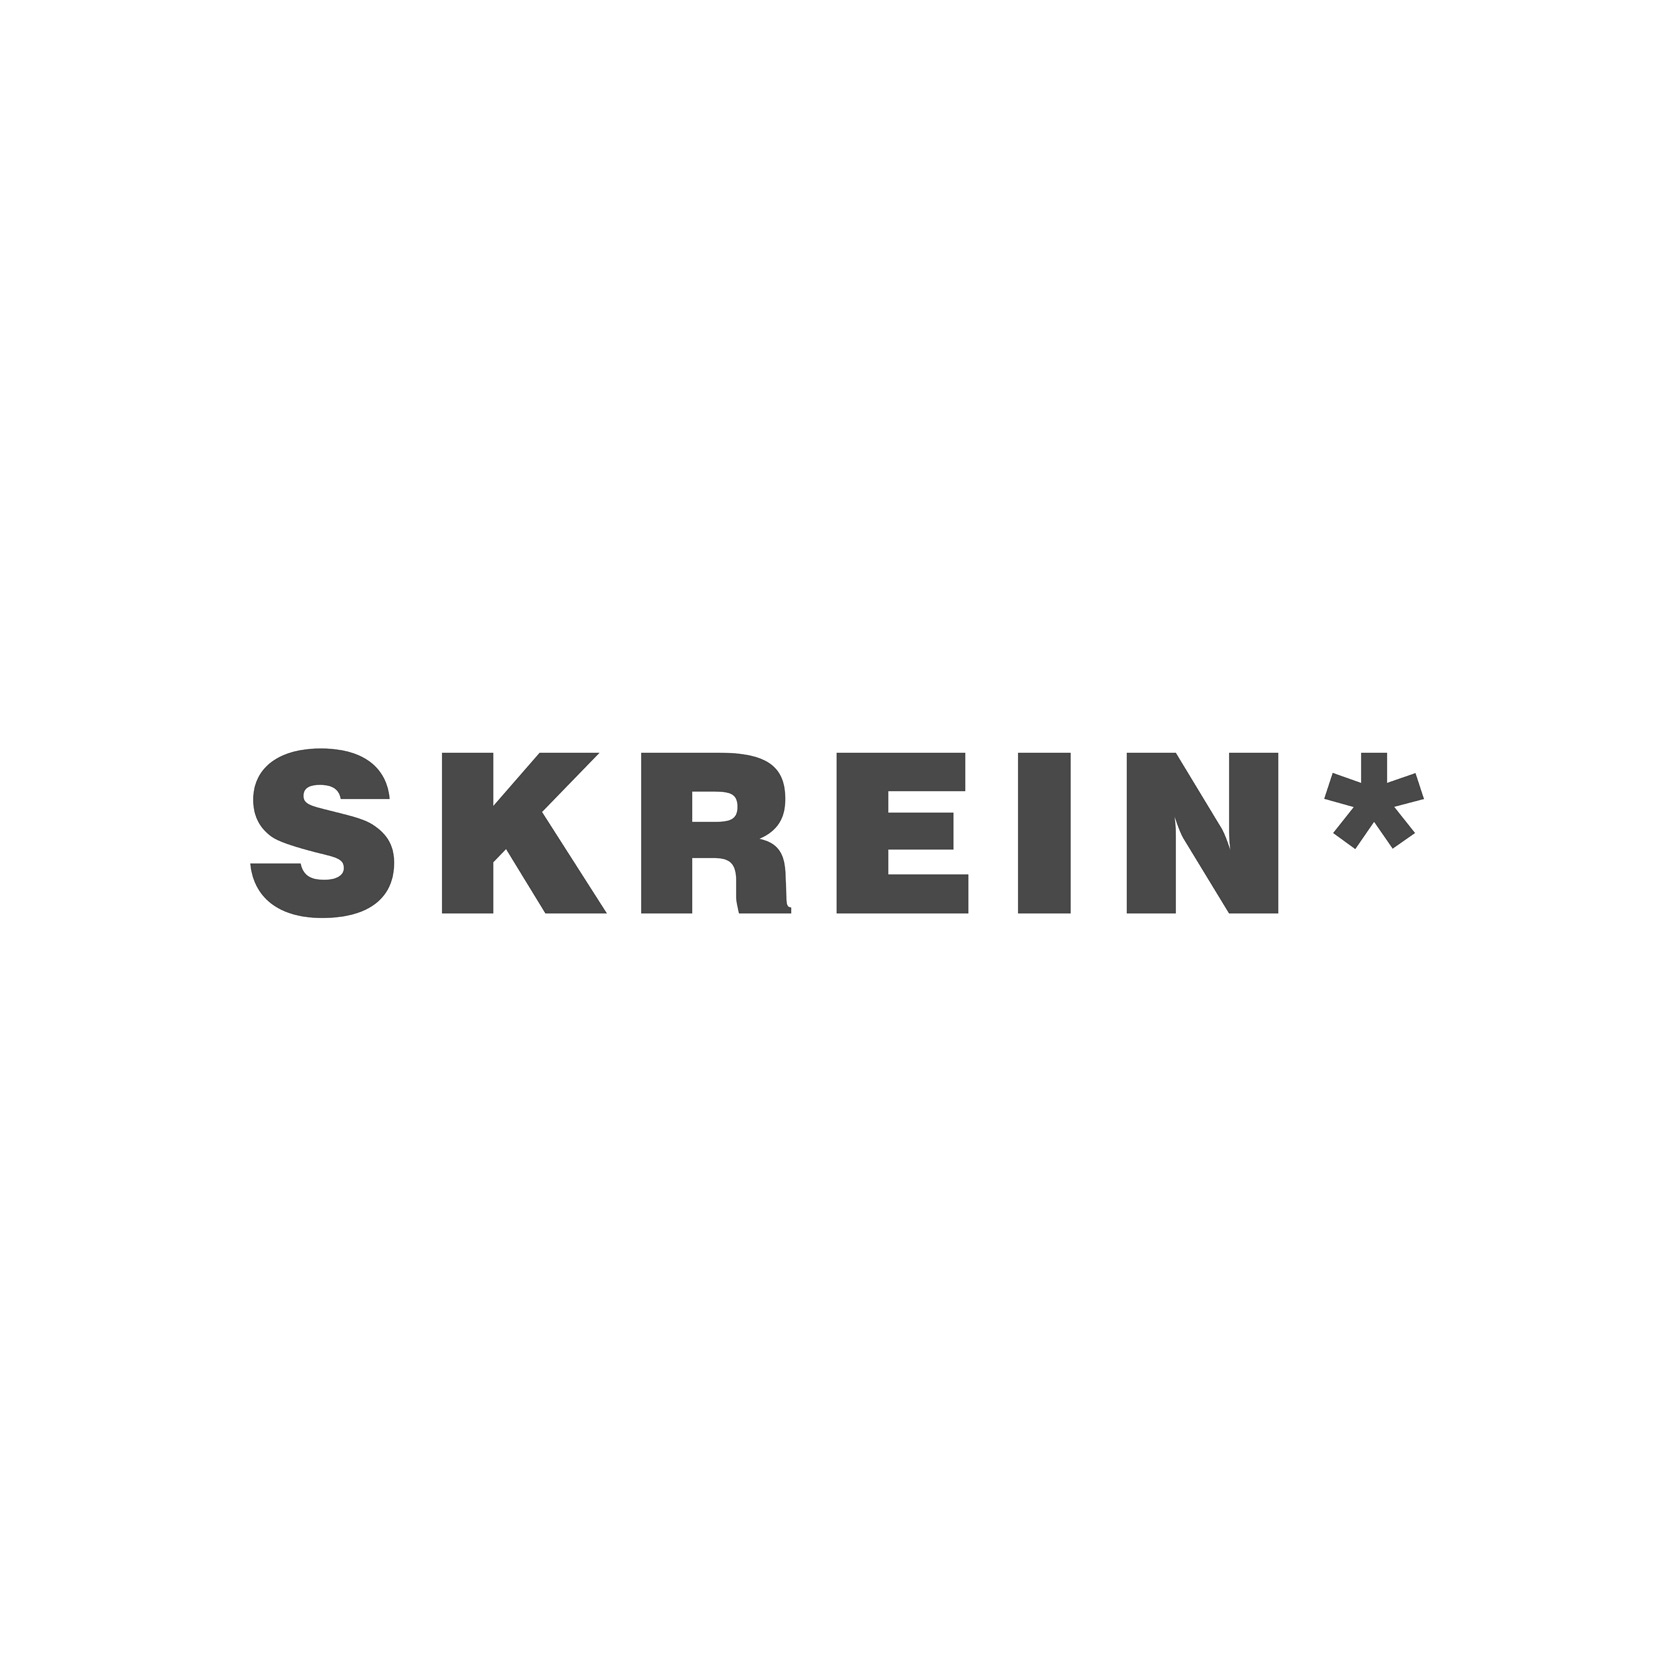 Skrein logo web